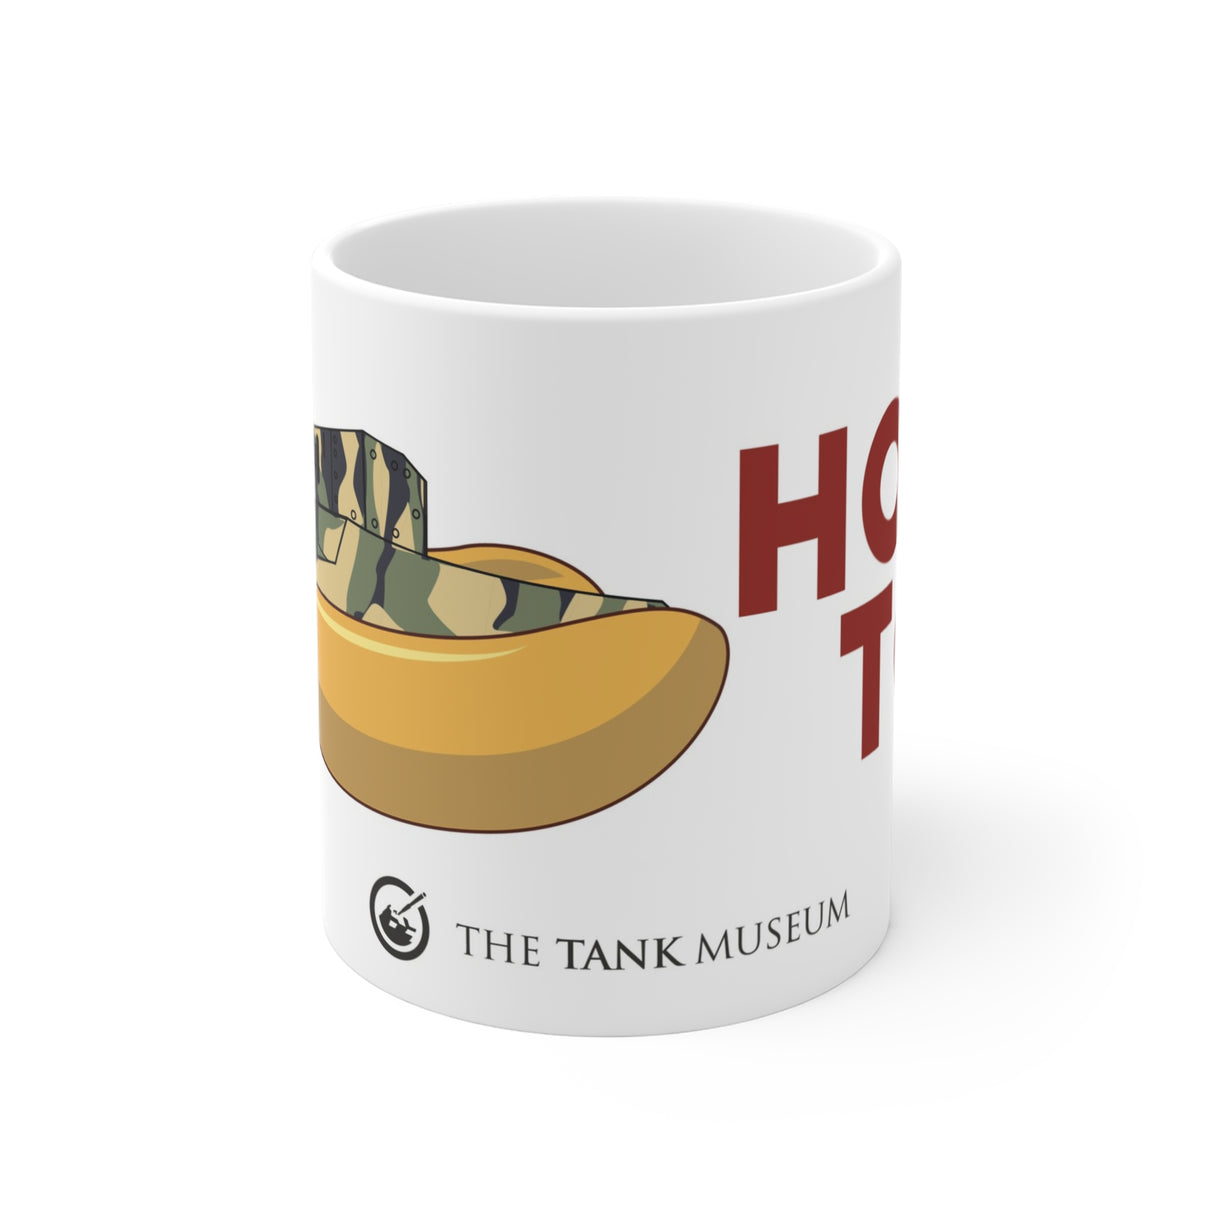 Hot Tog Ceramic Mug - Limited Edition